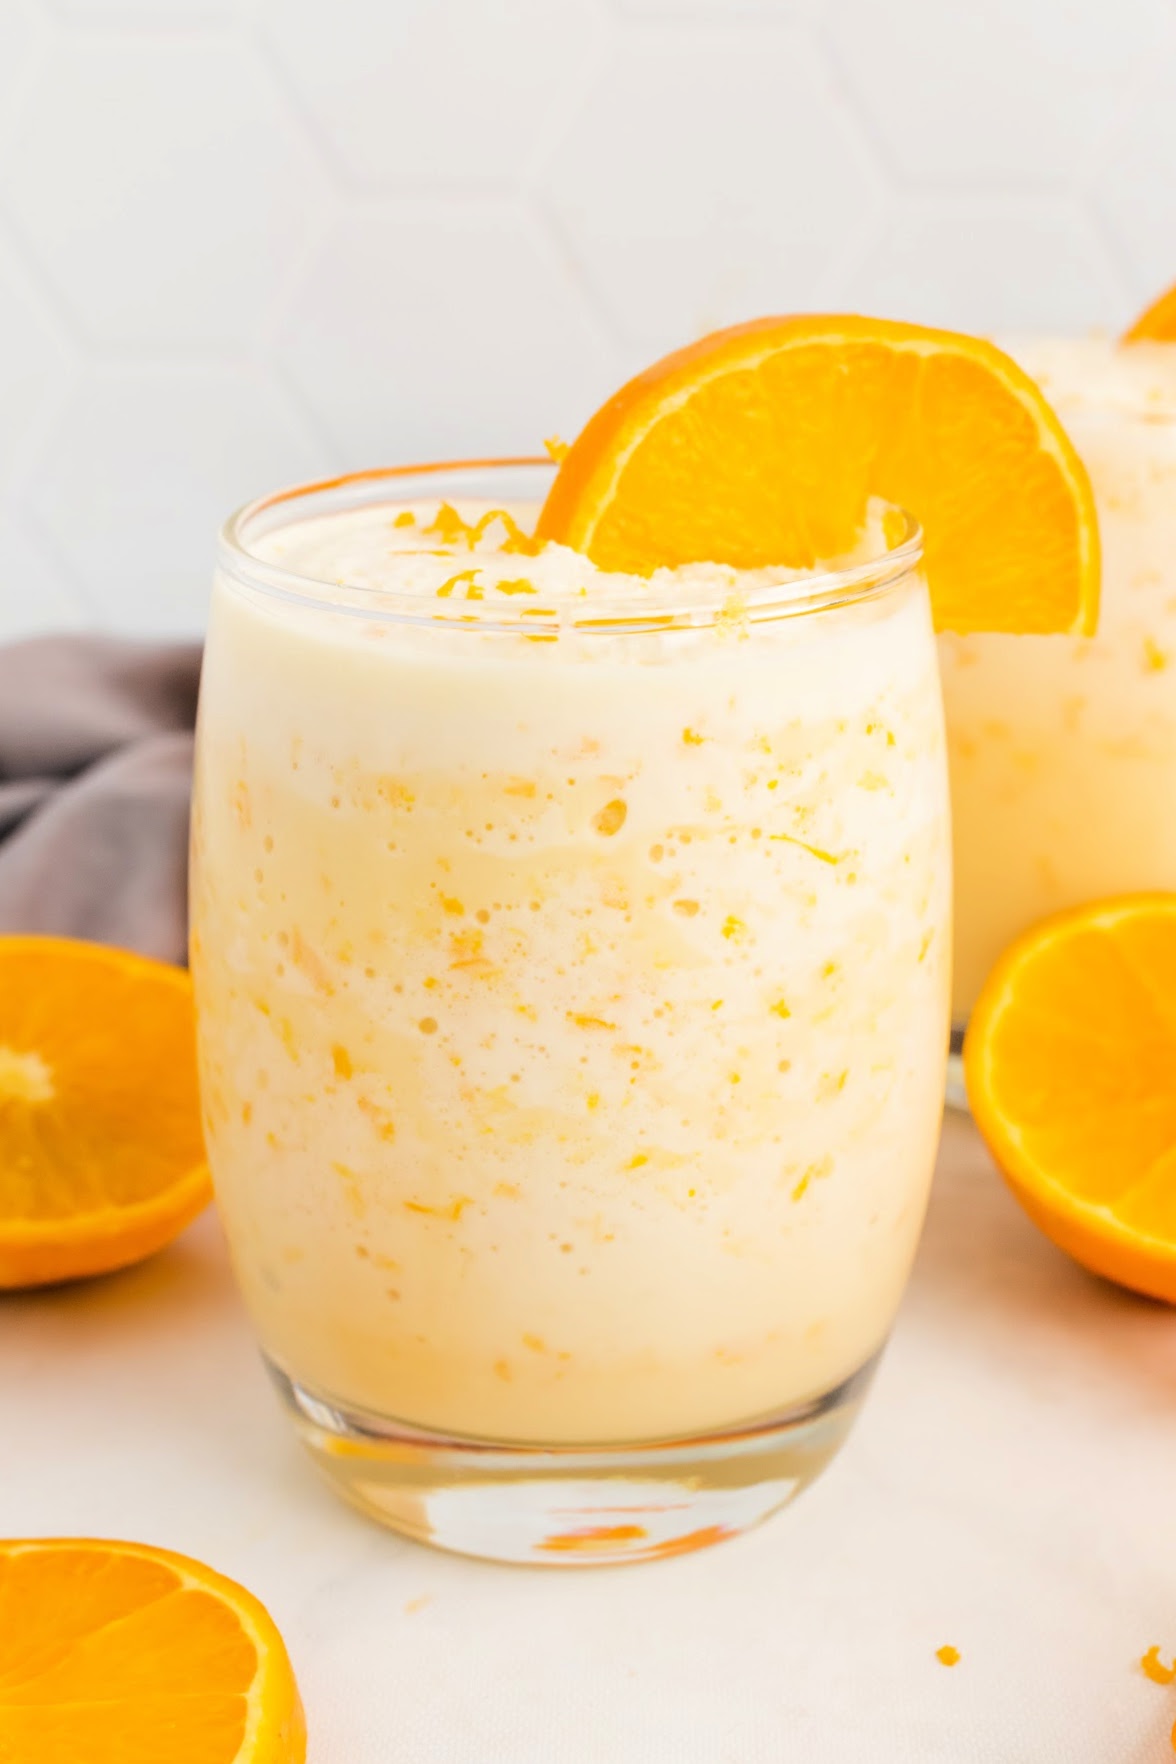 Creamy orange smoothie in a glass with fresh orange slices and oranges sitting around the glass.